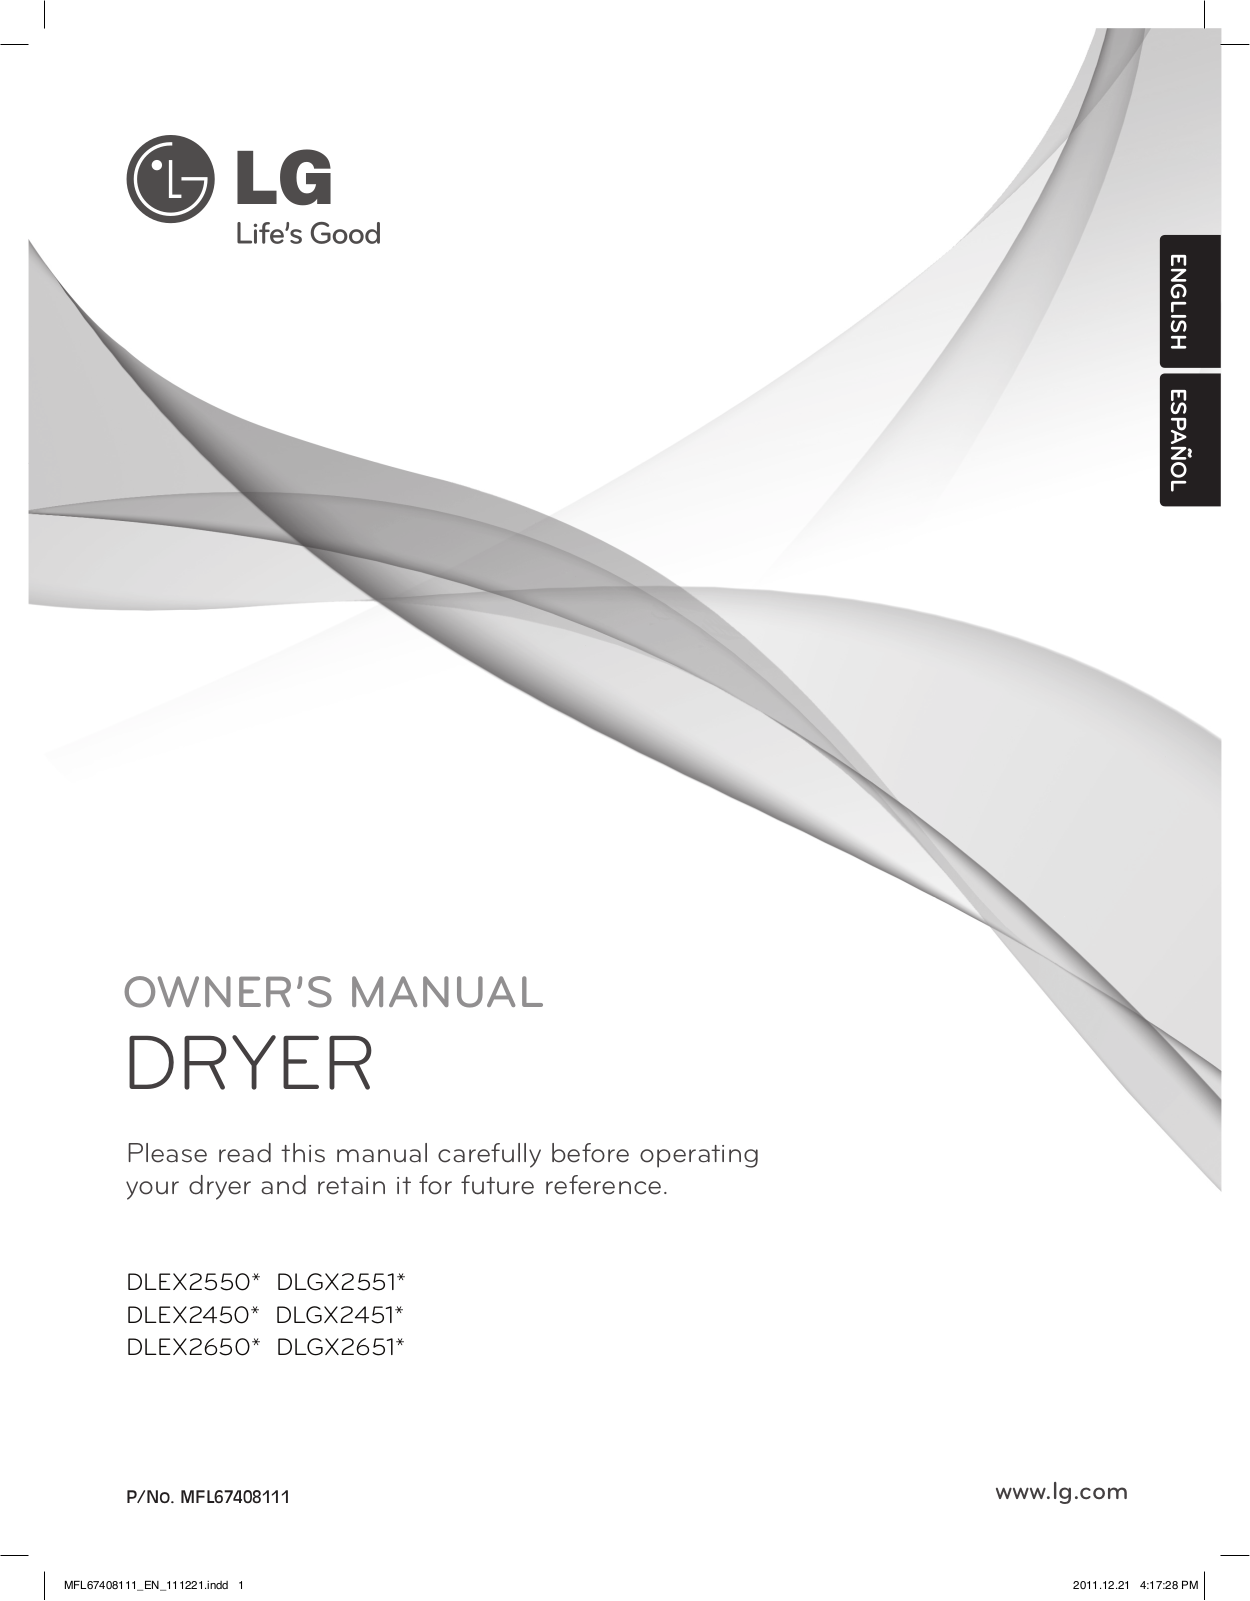 LG DLEX2655V User Manual